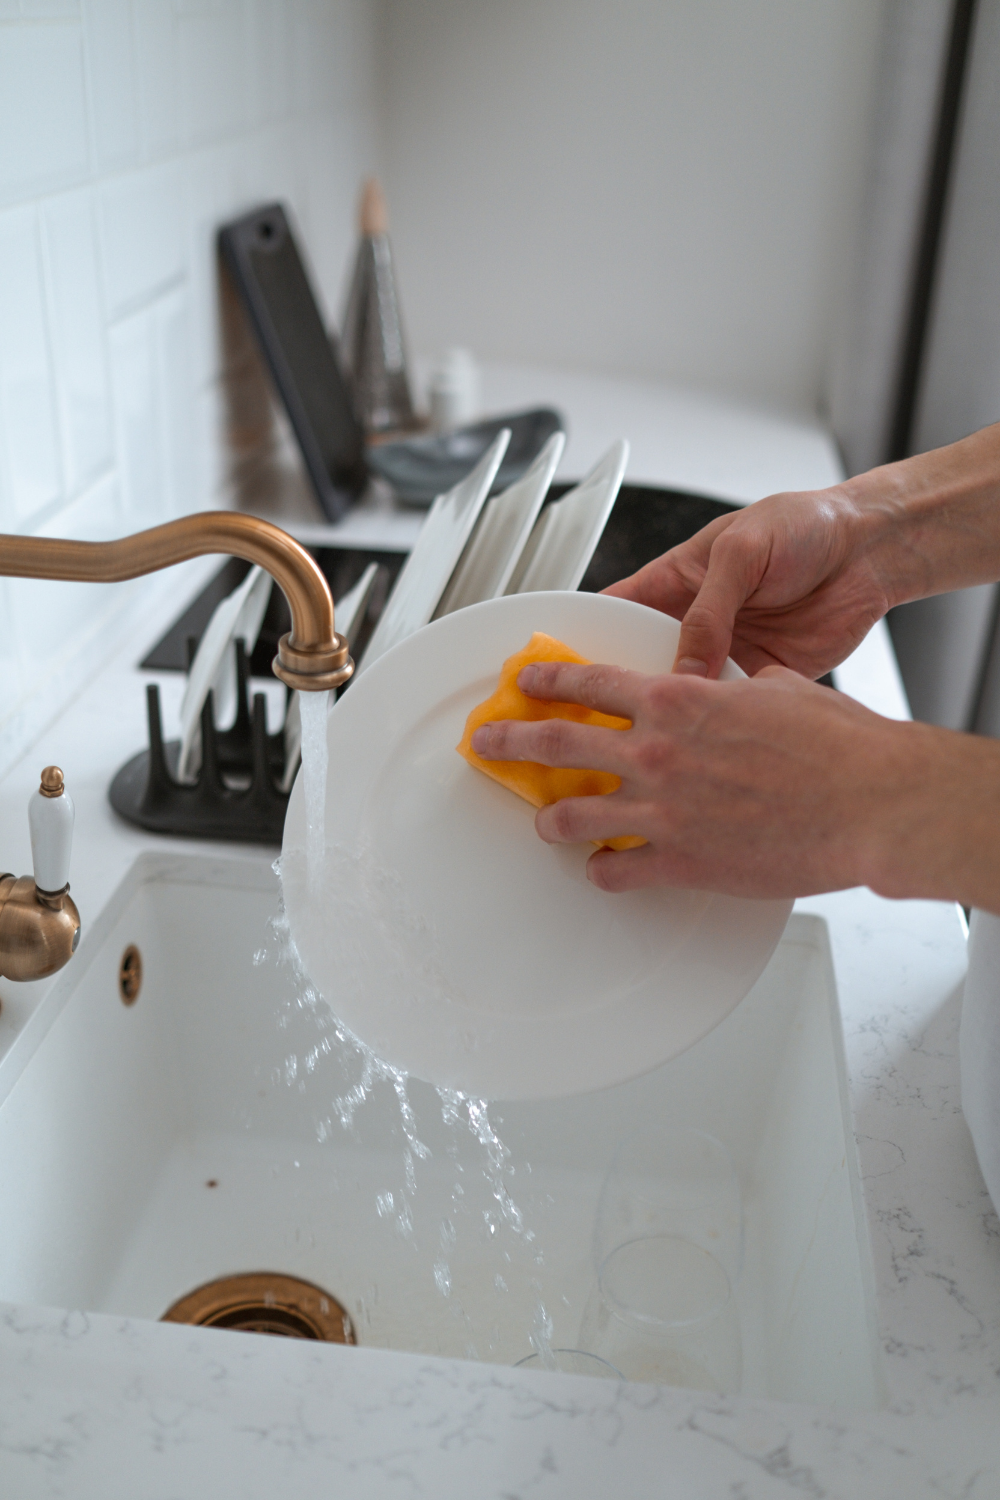 7 Genius Habits Of People Who Always Keep A Clean Home